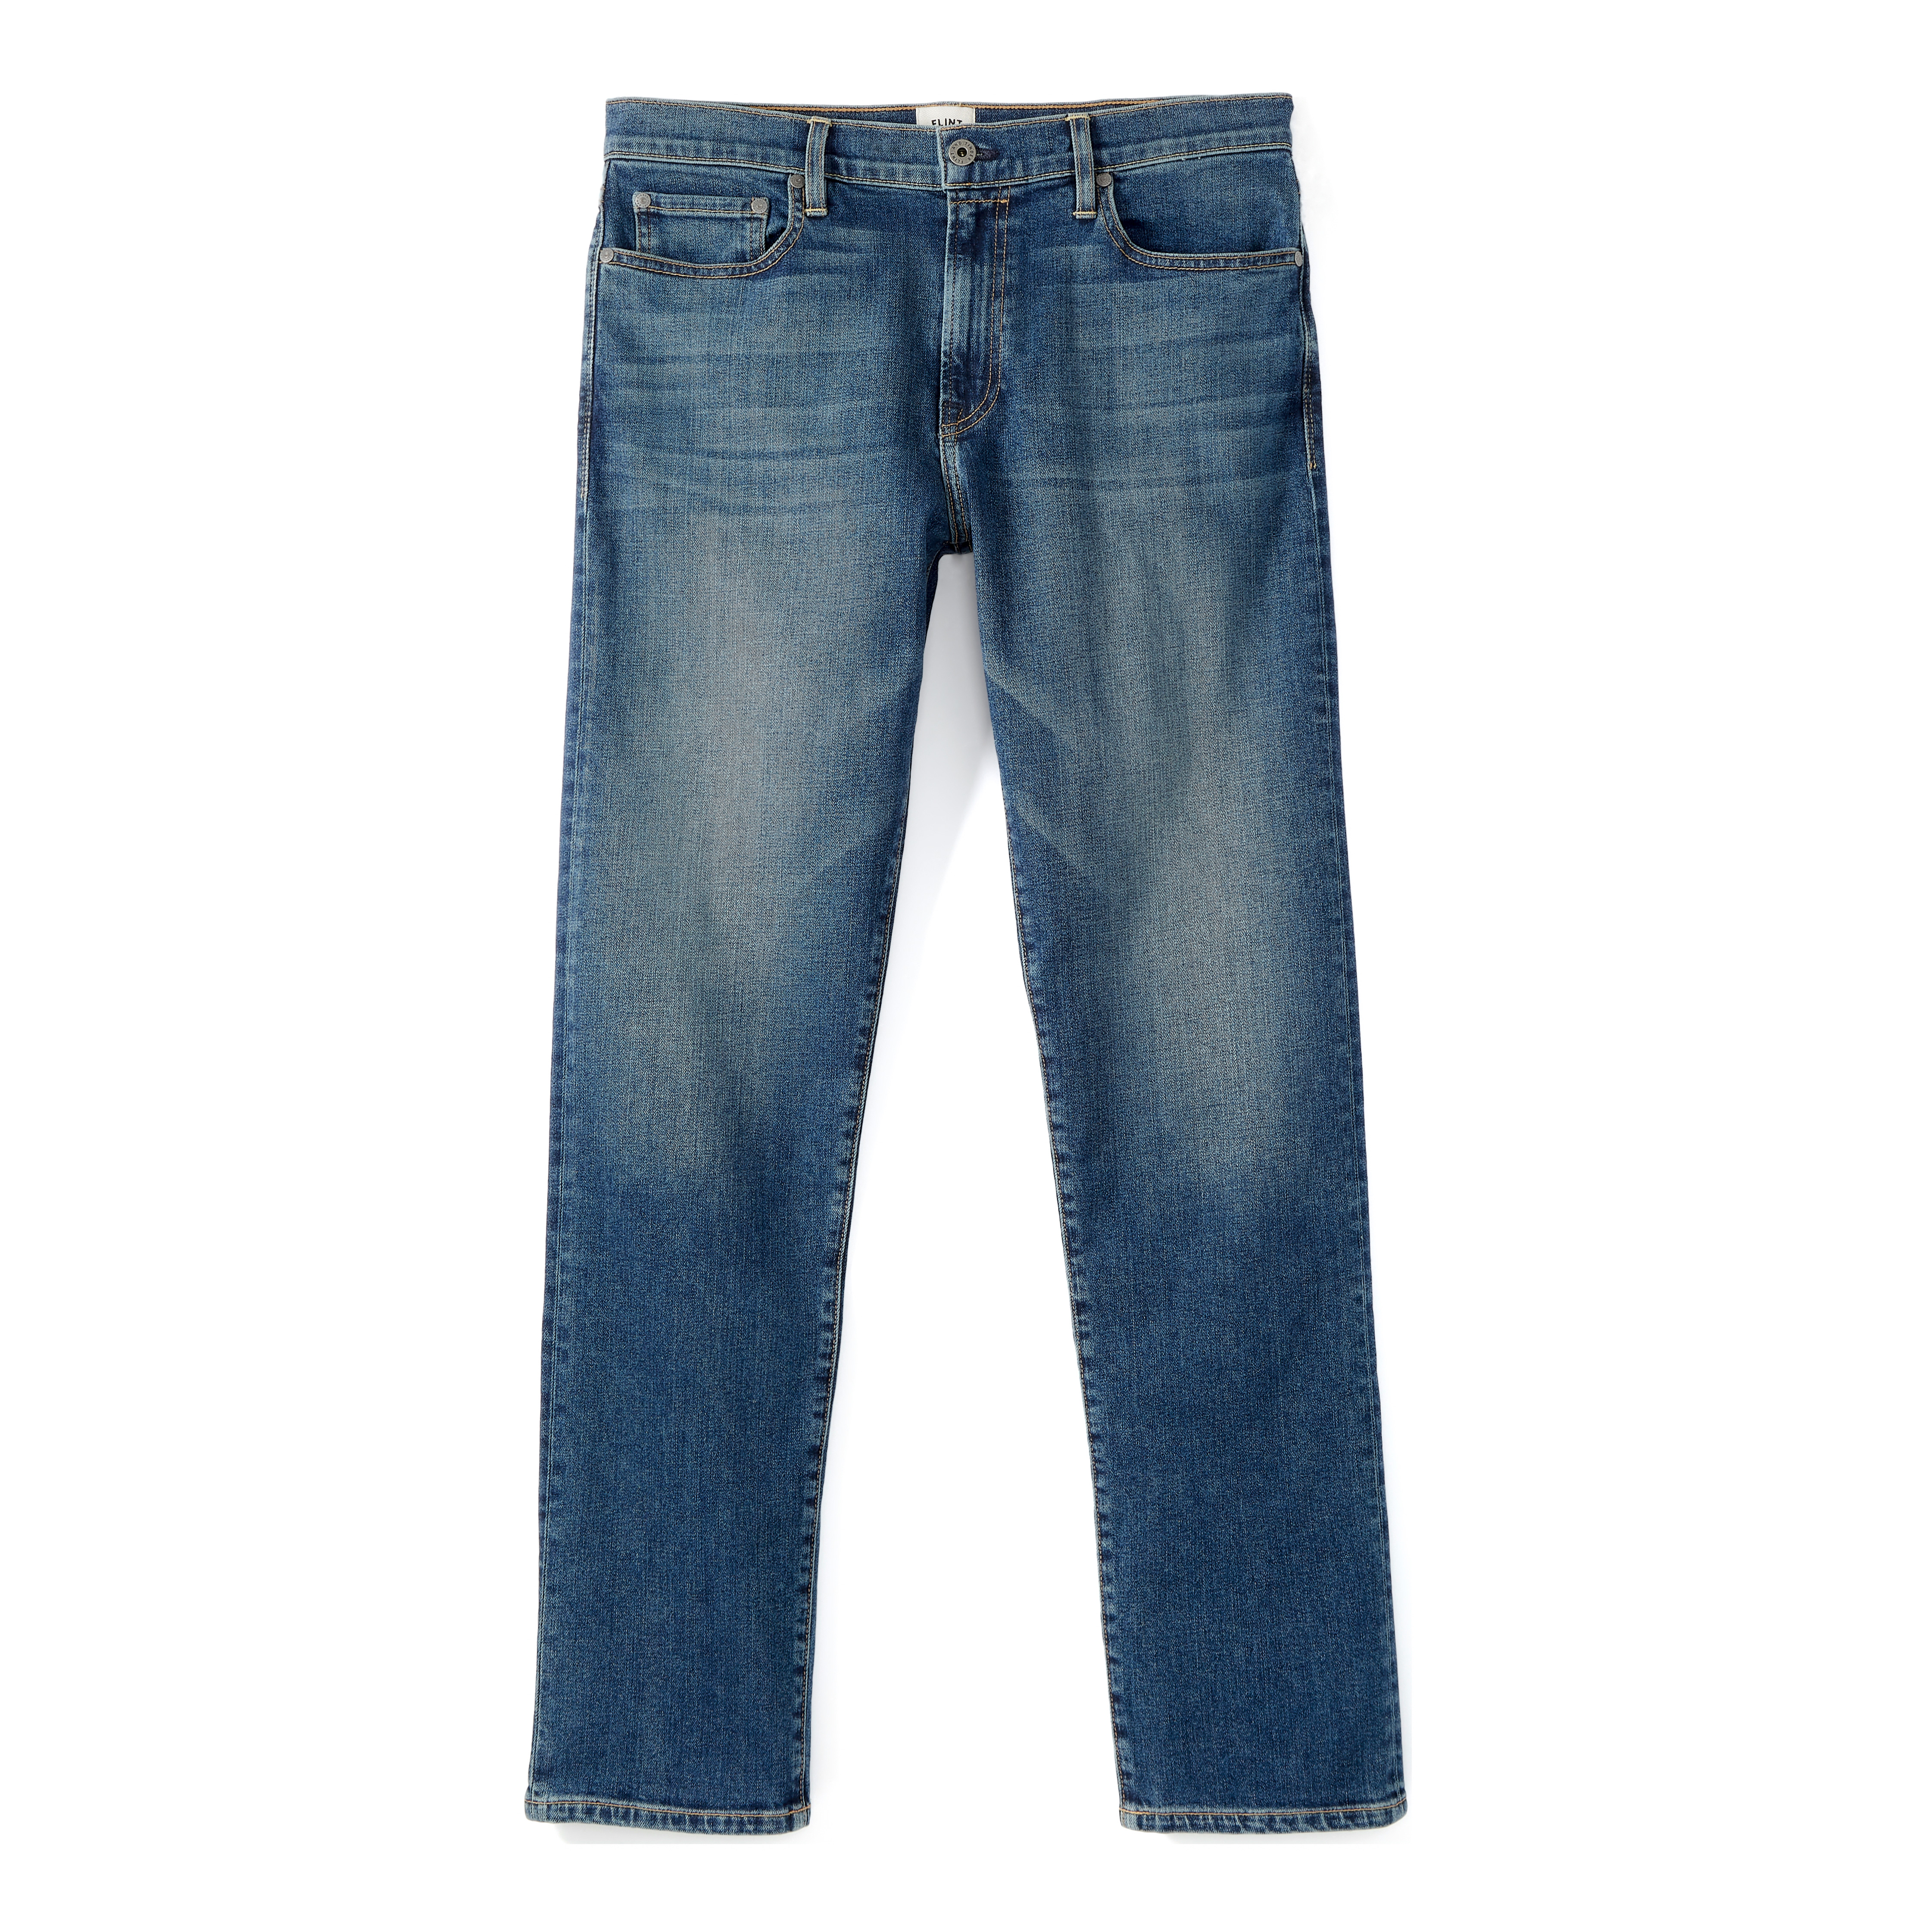 Buy Tyndale Versa Regular Fit Flex FR Jeans for USD 112.00-135.00